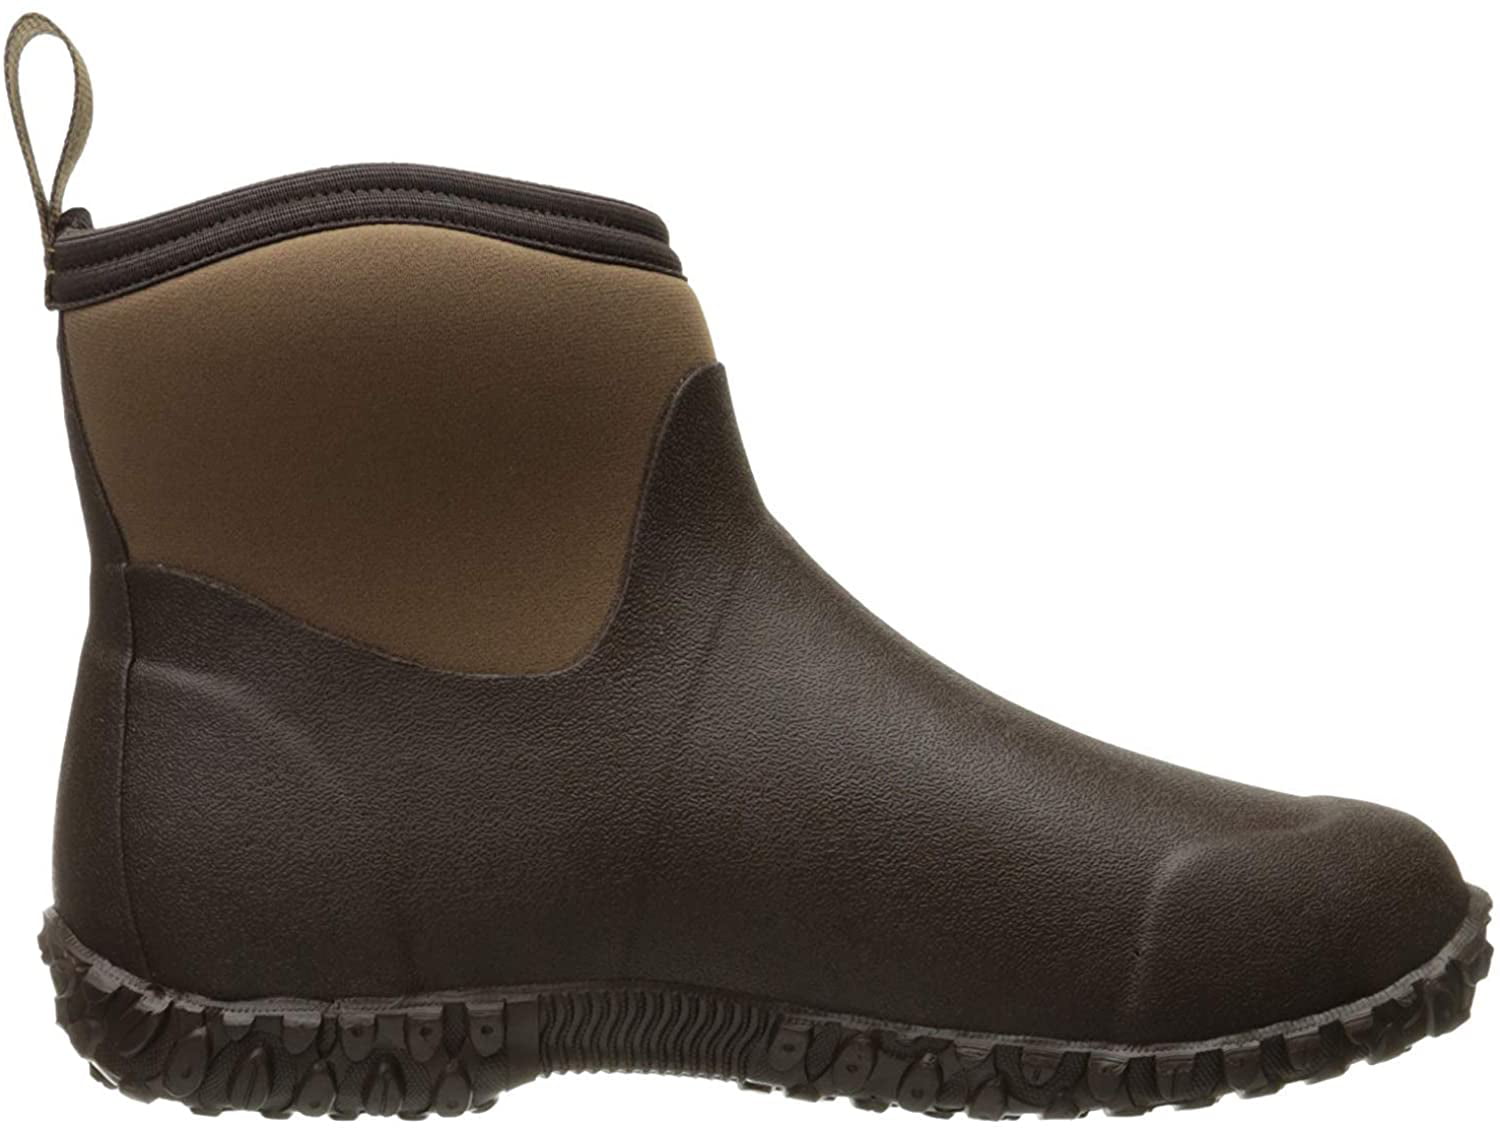 Muckster ll Ankle-Height Men's Rubber Garden Boots Black/Otter 12 M US 